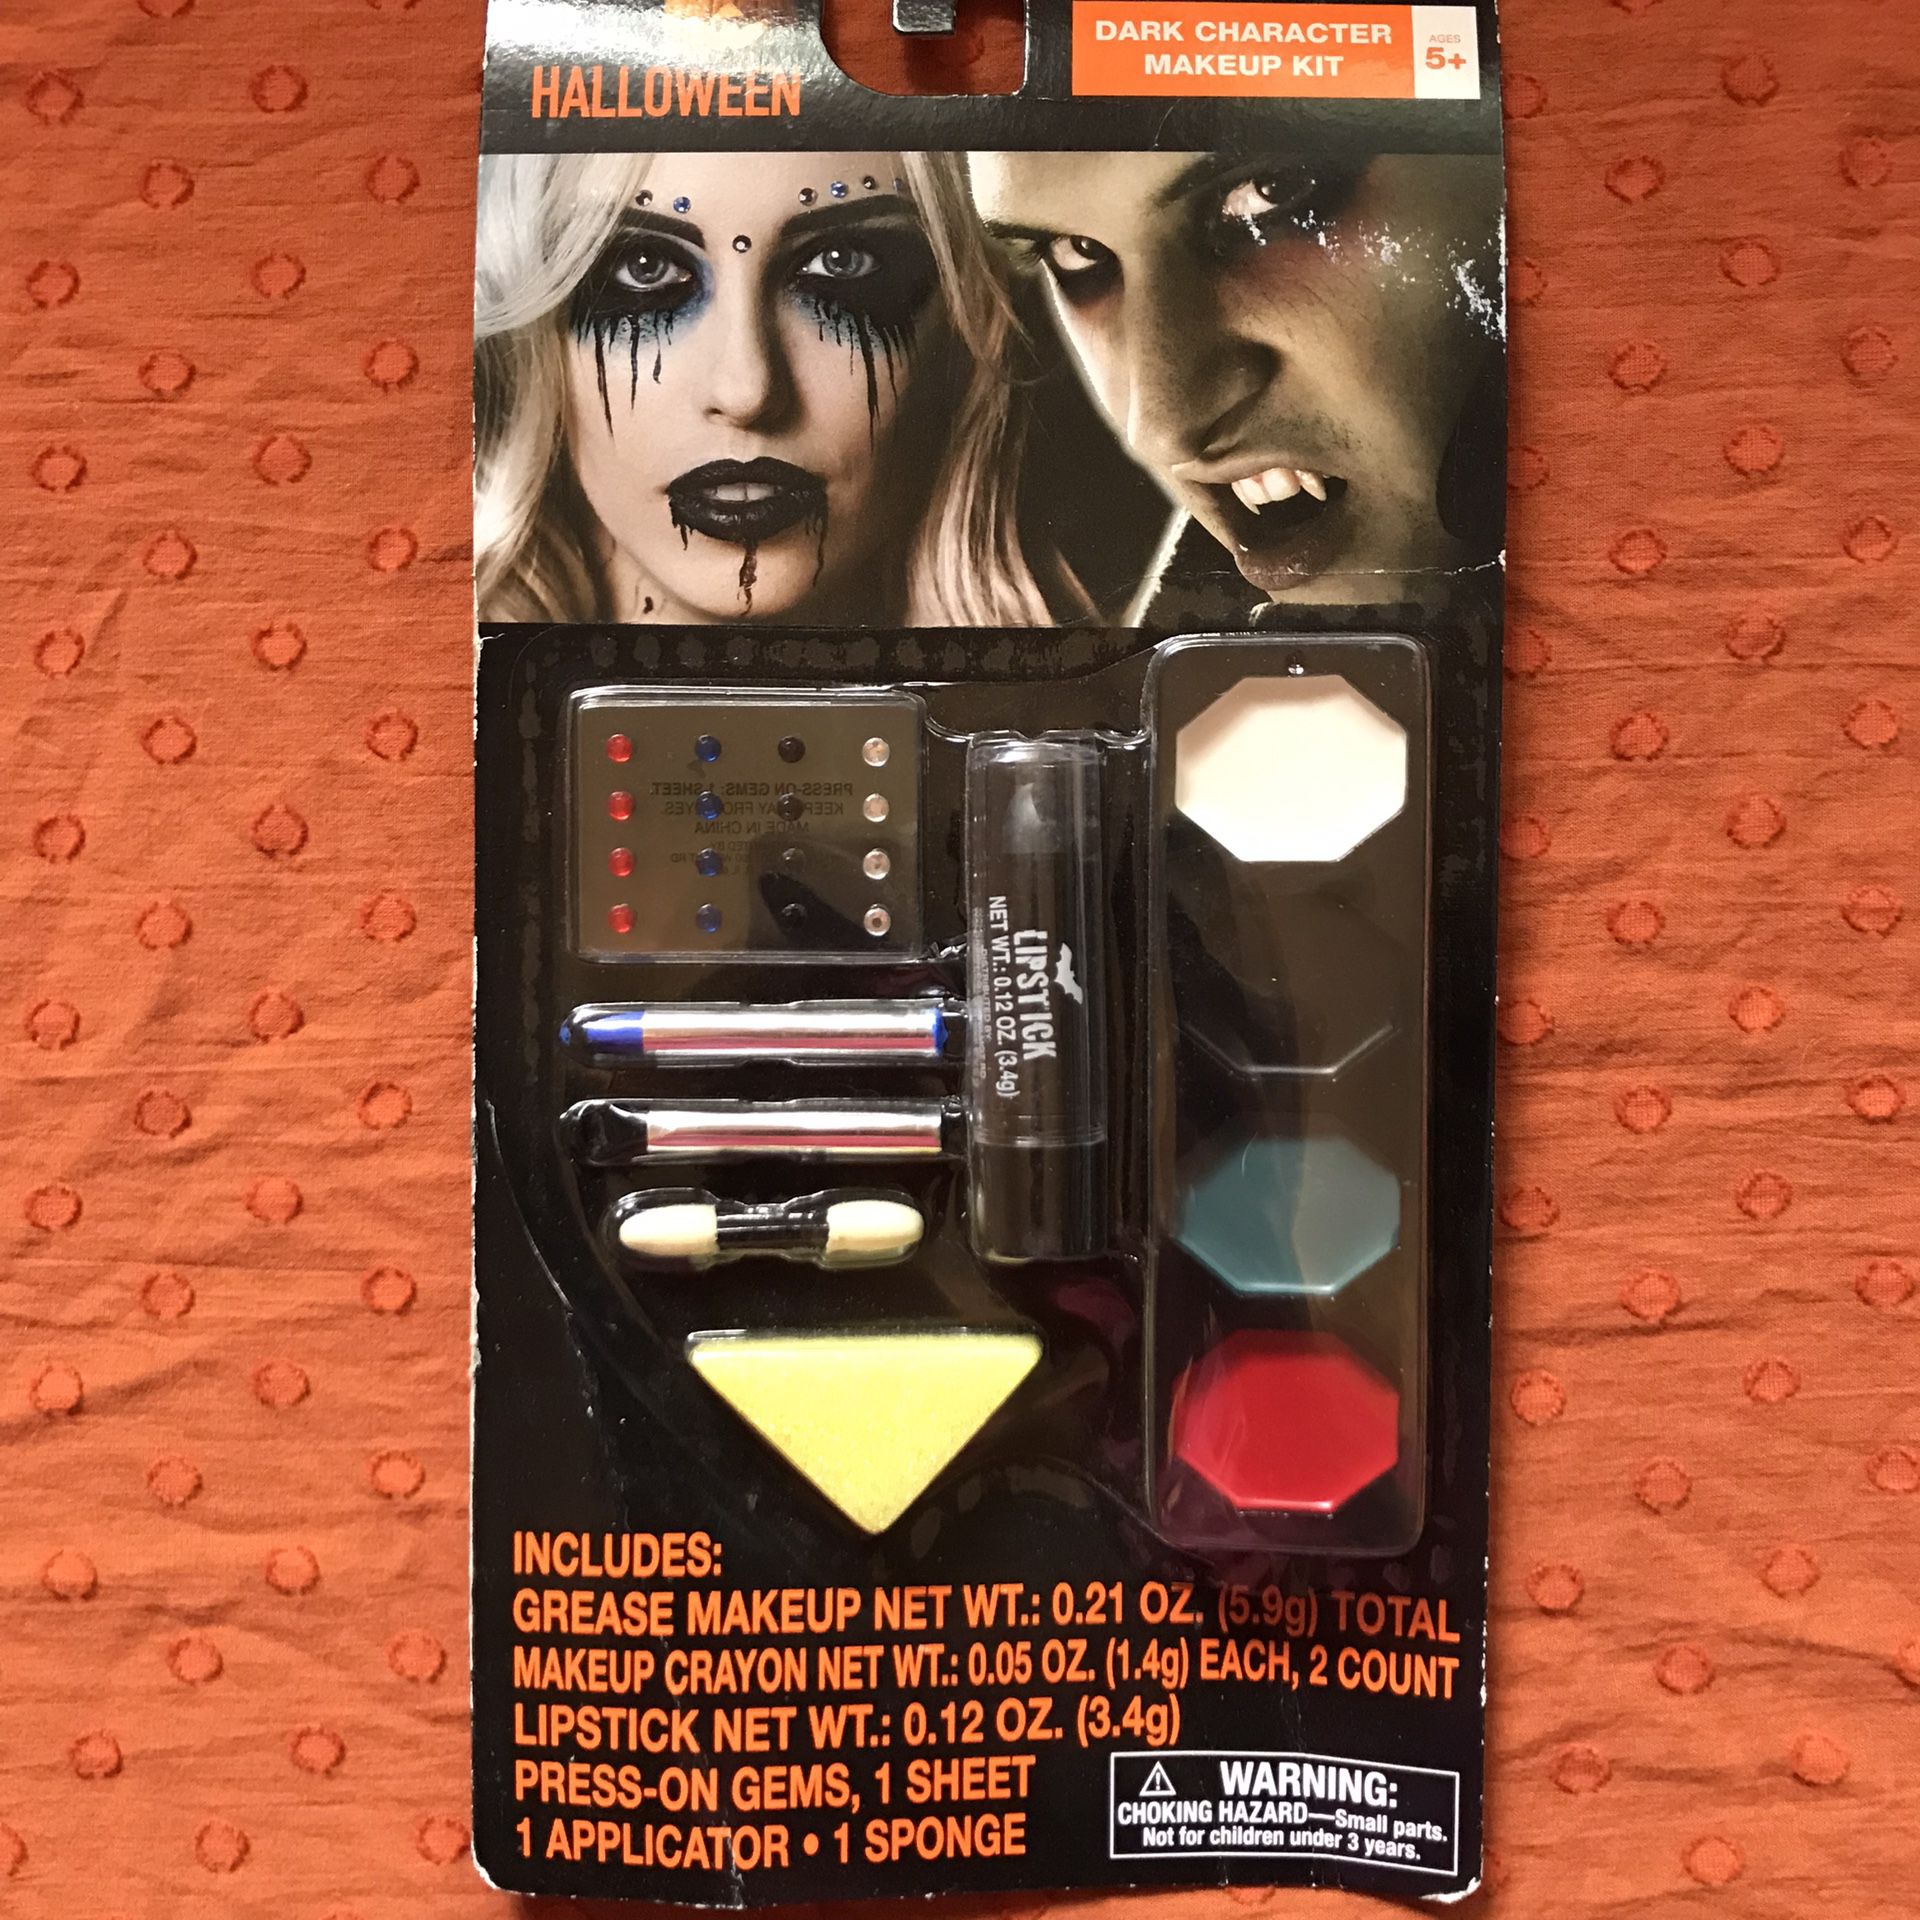 Dark Character Makeup Kit